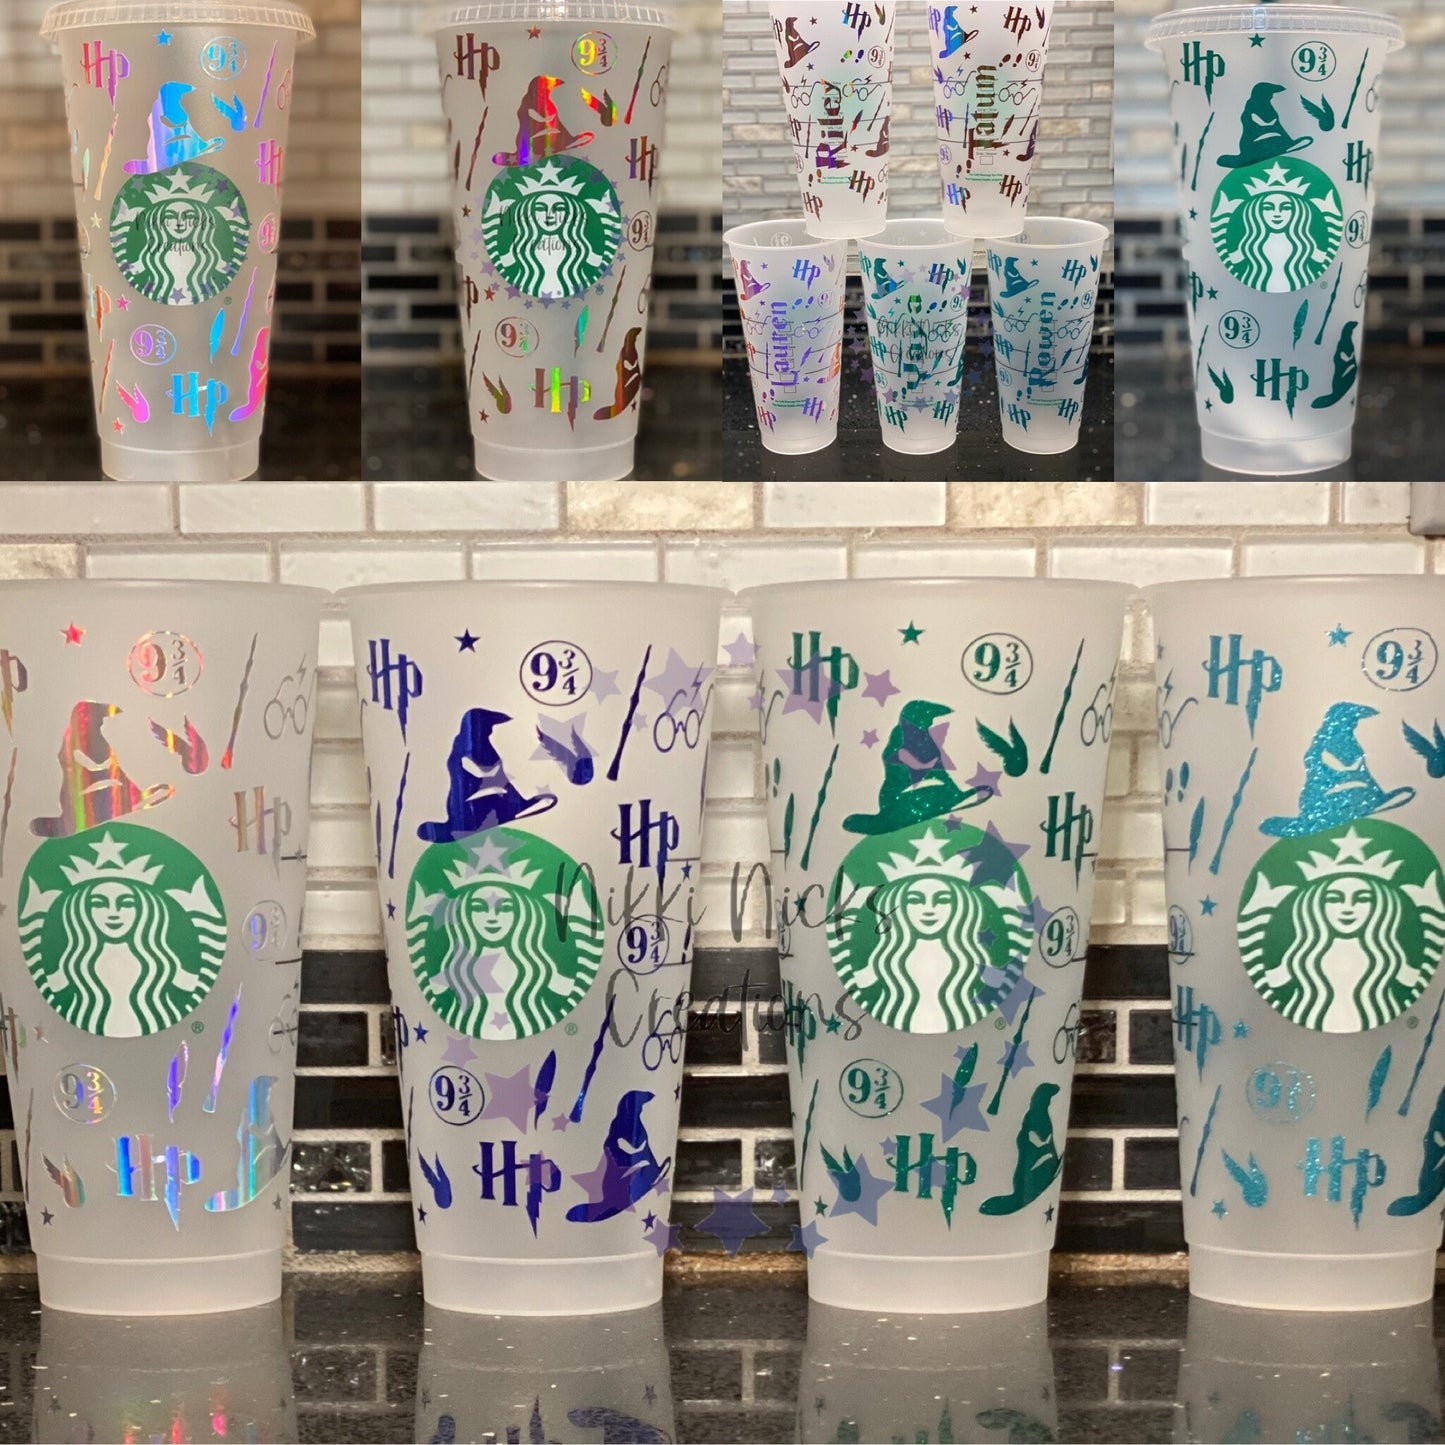 Harry Potter Starbucks cup